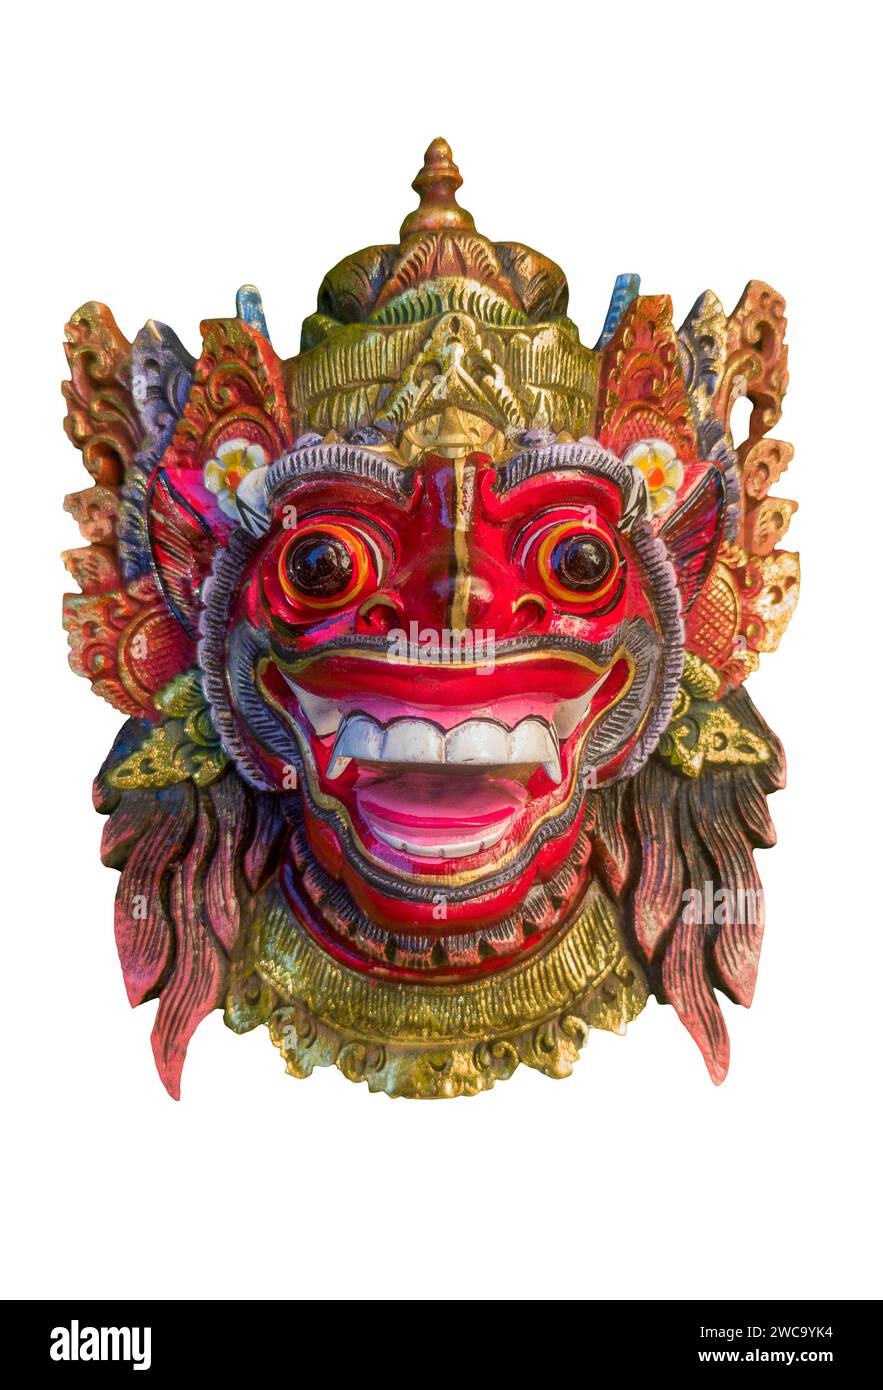 Maschera Barong balinese come souvenir. Souvenir decorativo asiatico con poteri magici per proteggere la casa Foto Stock